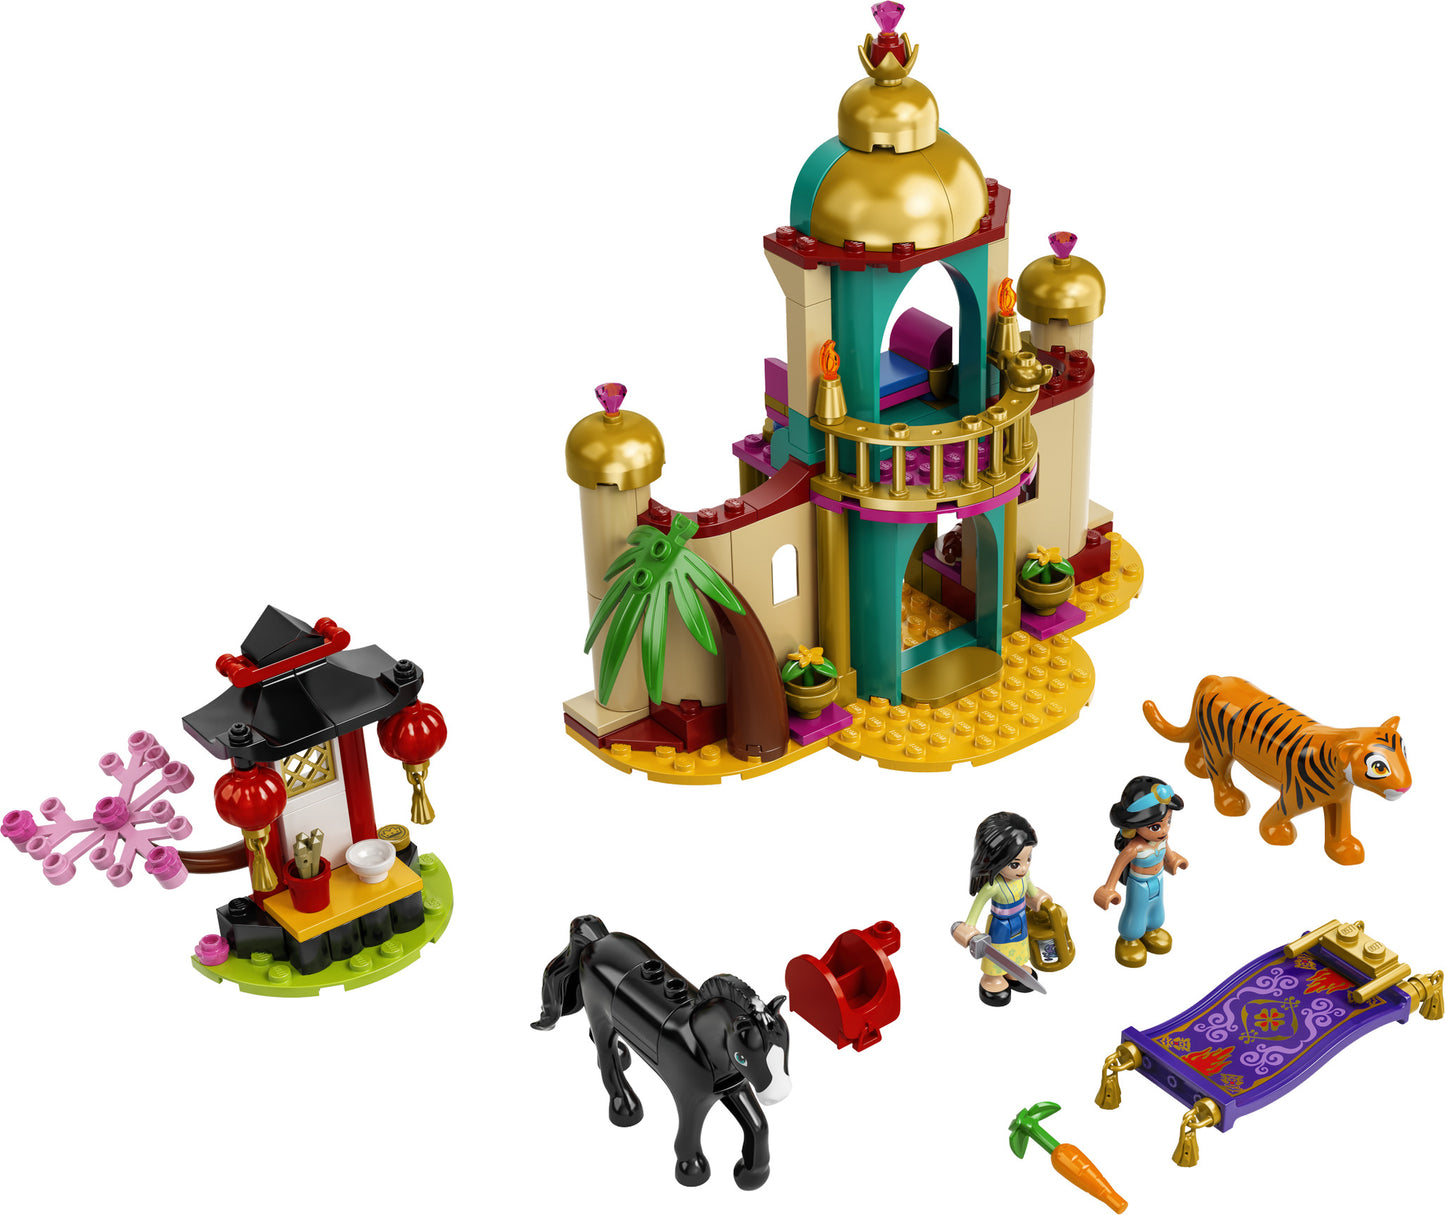 43208 LEGO Disney - L’avventura di Jasmine e Mulan